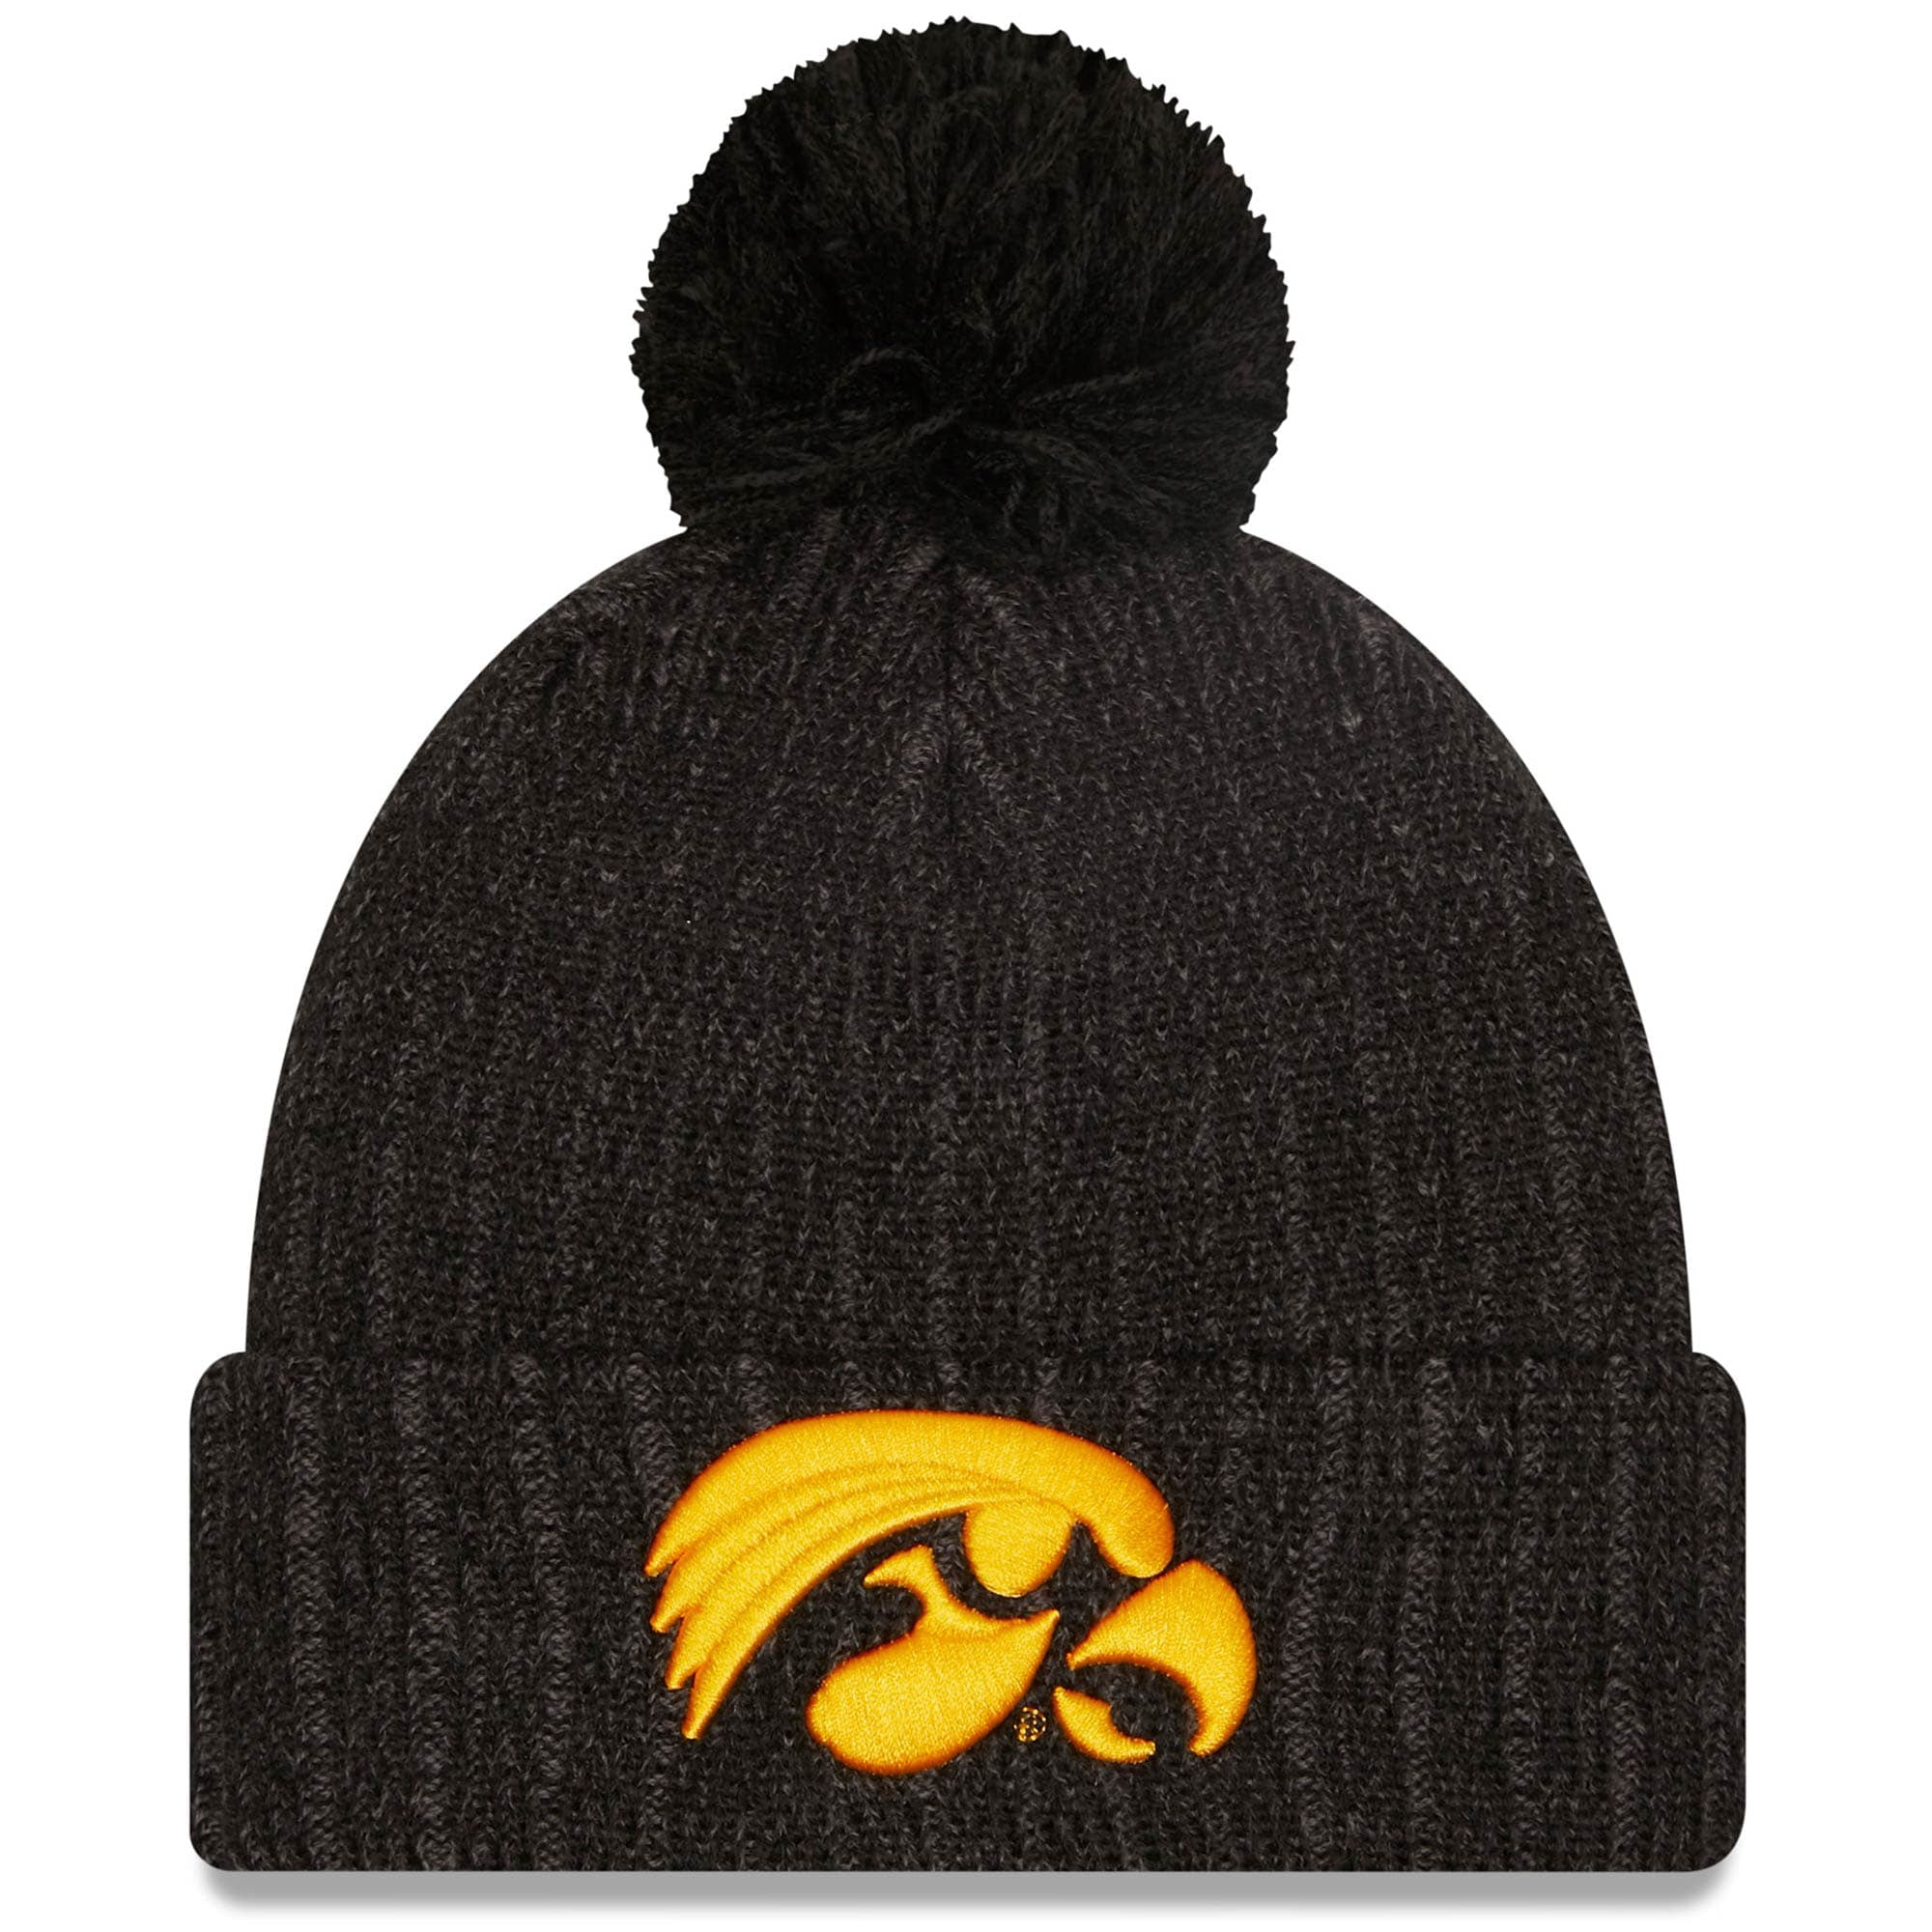 NCAA Iowa Hawkeyes Mens Cuffed Knit Hat 